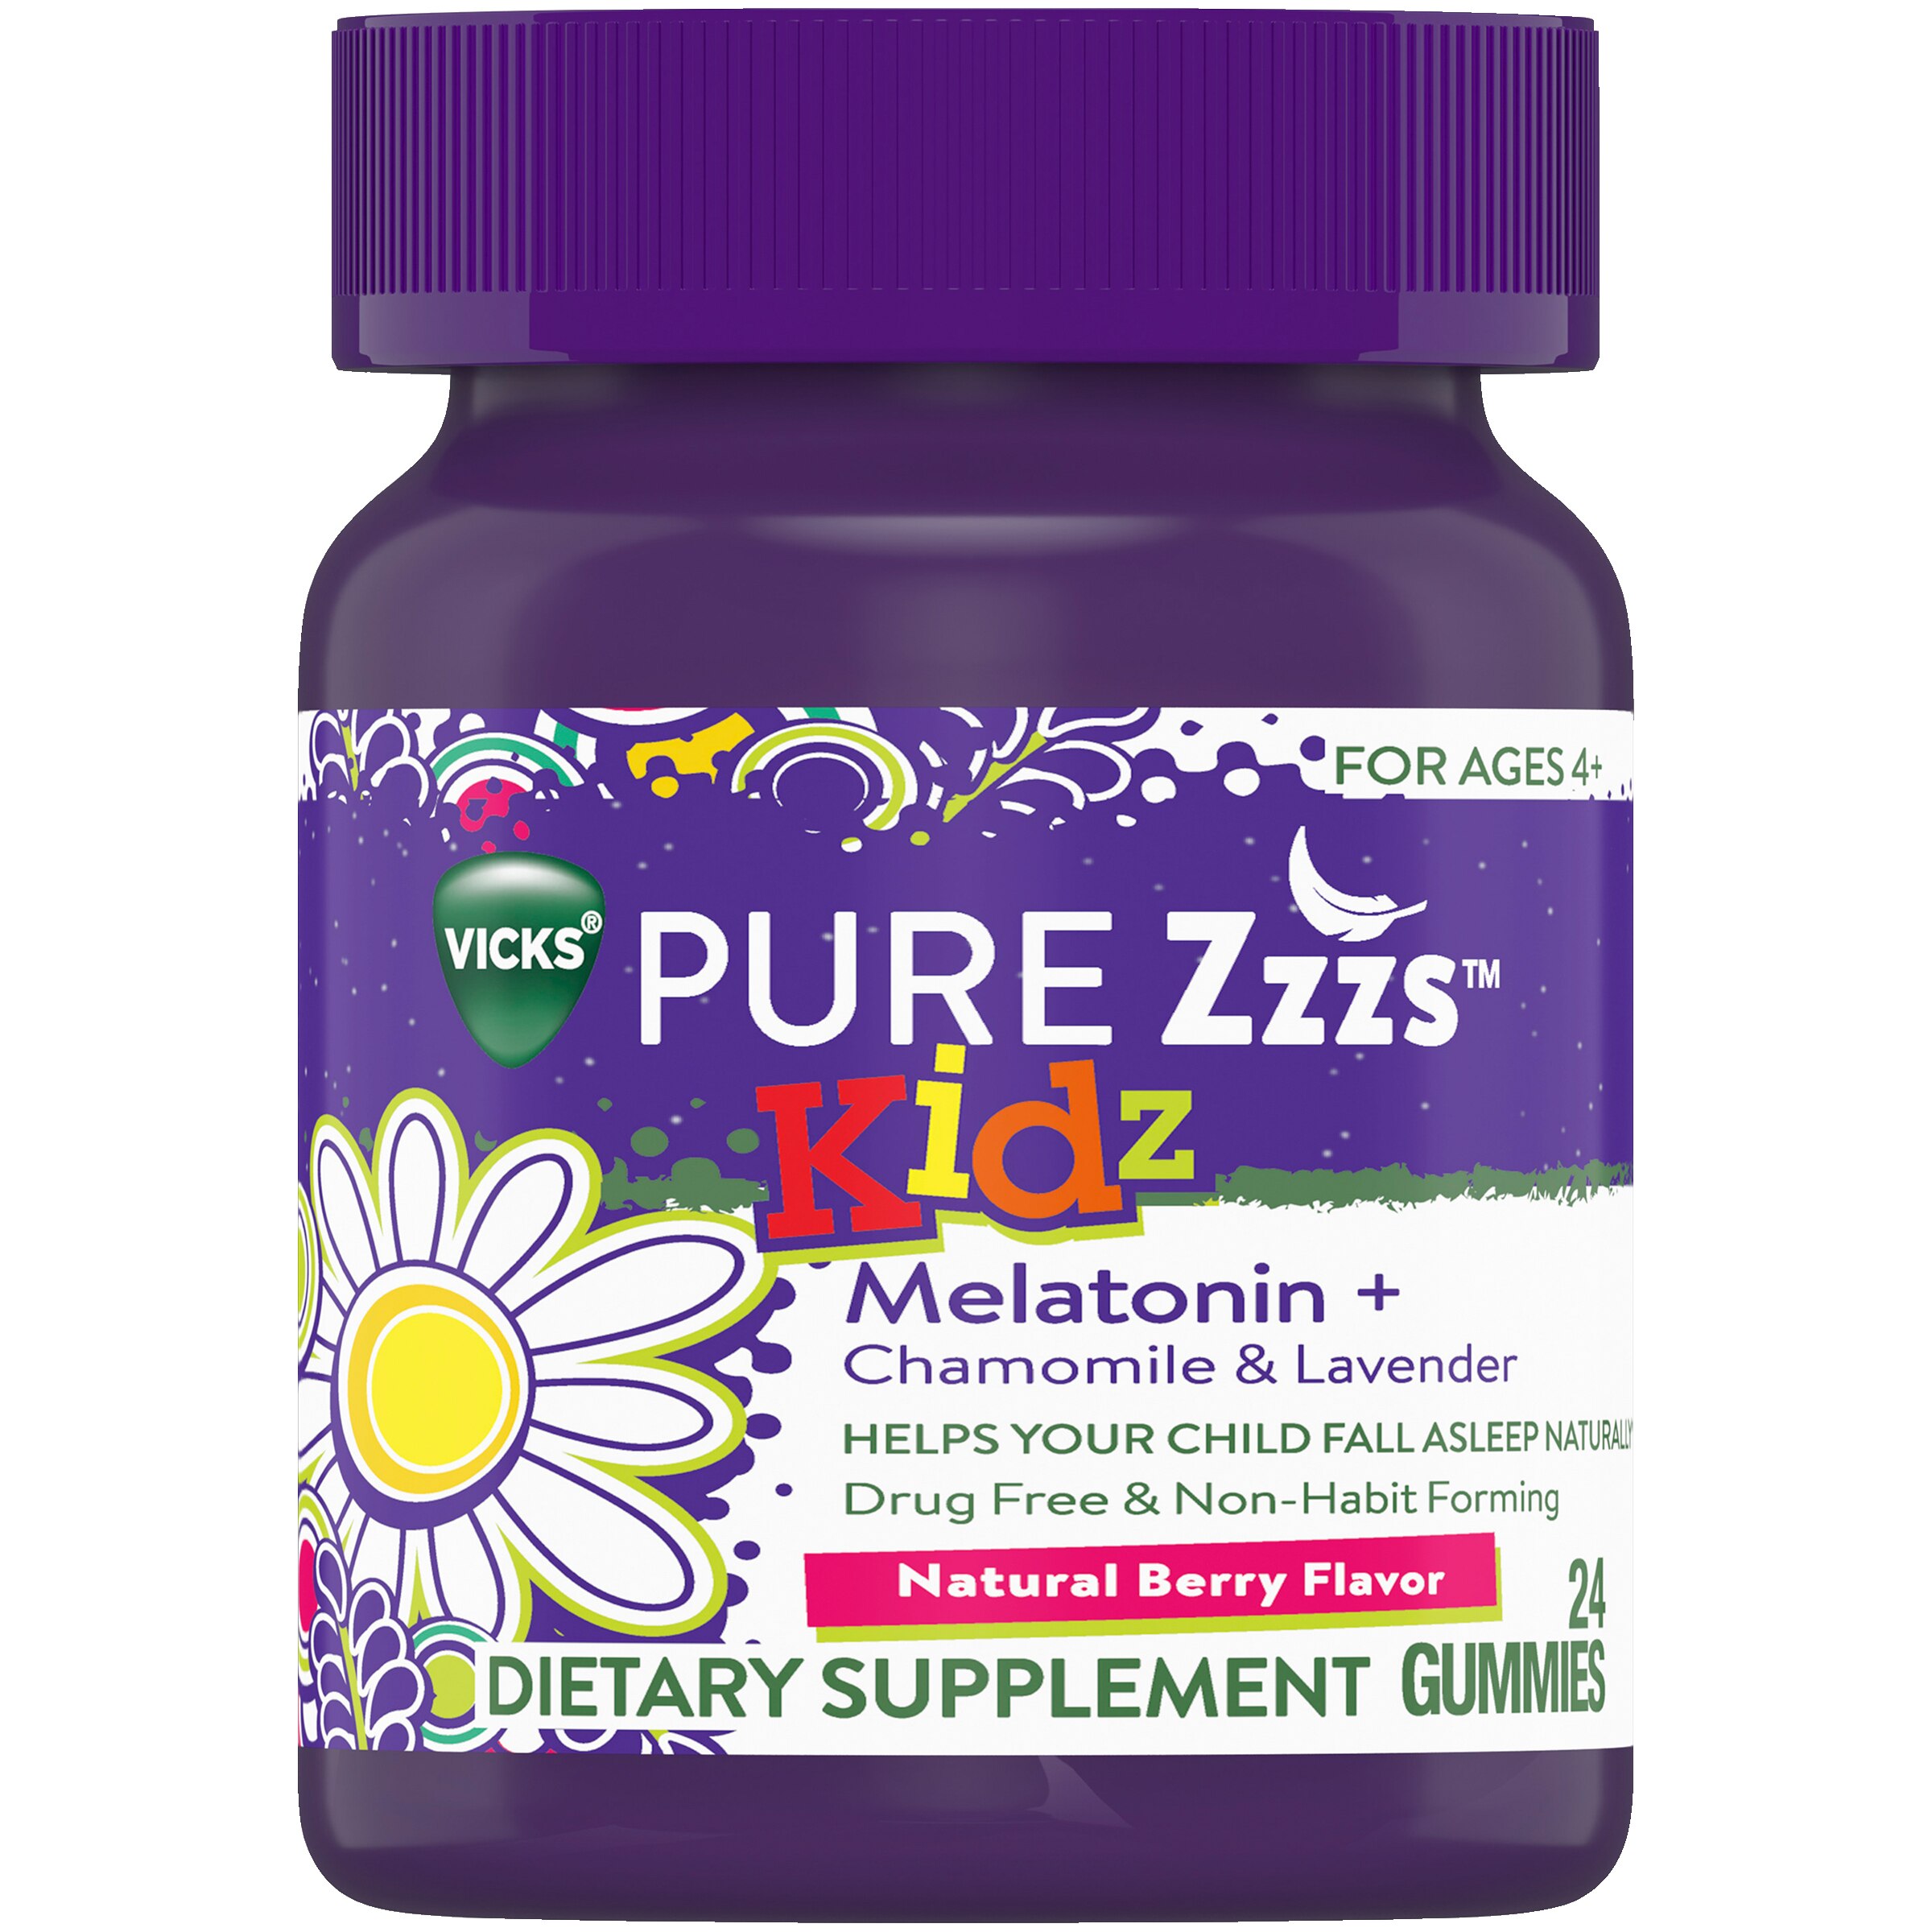 Vicks PURE Zzzs Kidz Melatonin Lavender & Chamomile Sleep Aid Gummies for Kids & Children, Natural Berry Flavor, 0.5mg per gummy